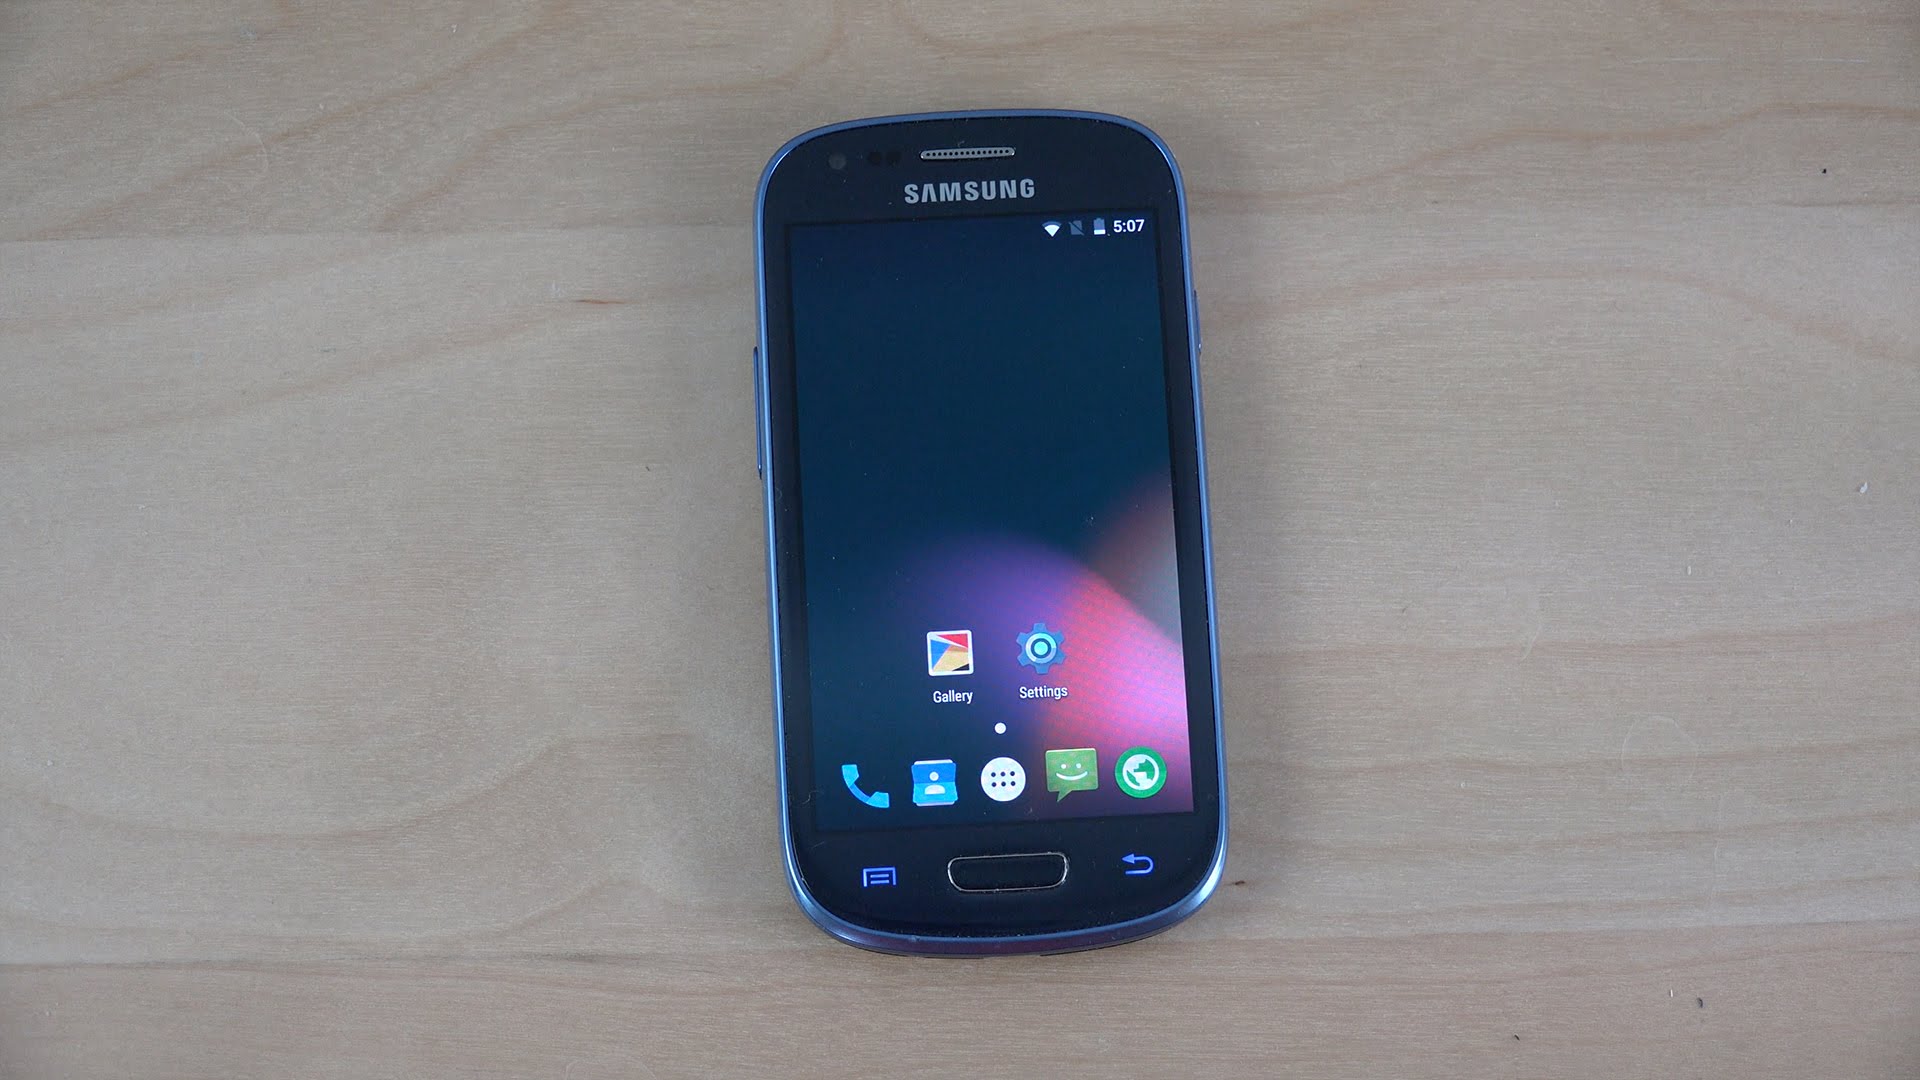 Samsung Galaxy S3 Mini Android 5.1.1(CM 12.1) Yükleme Rehberi samsung s3 mini 5.1.1 samsung galaxy s3 mini android 5.1.1 yükleme s3 mini android 5.1.1 stabil rom galaxy s3 mini android 5.1.1 galaxy s3 mini 5.1.1 android 5.1.1 galaxy s3 mini 